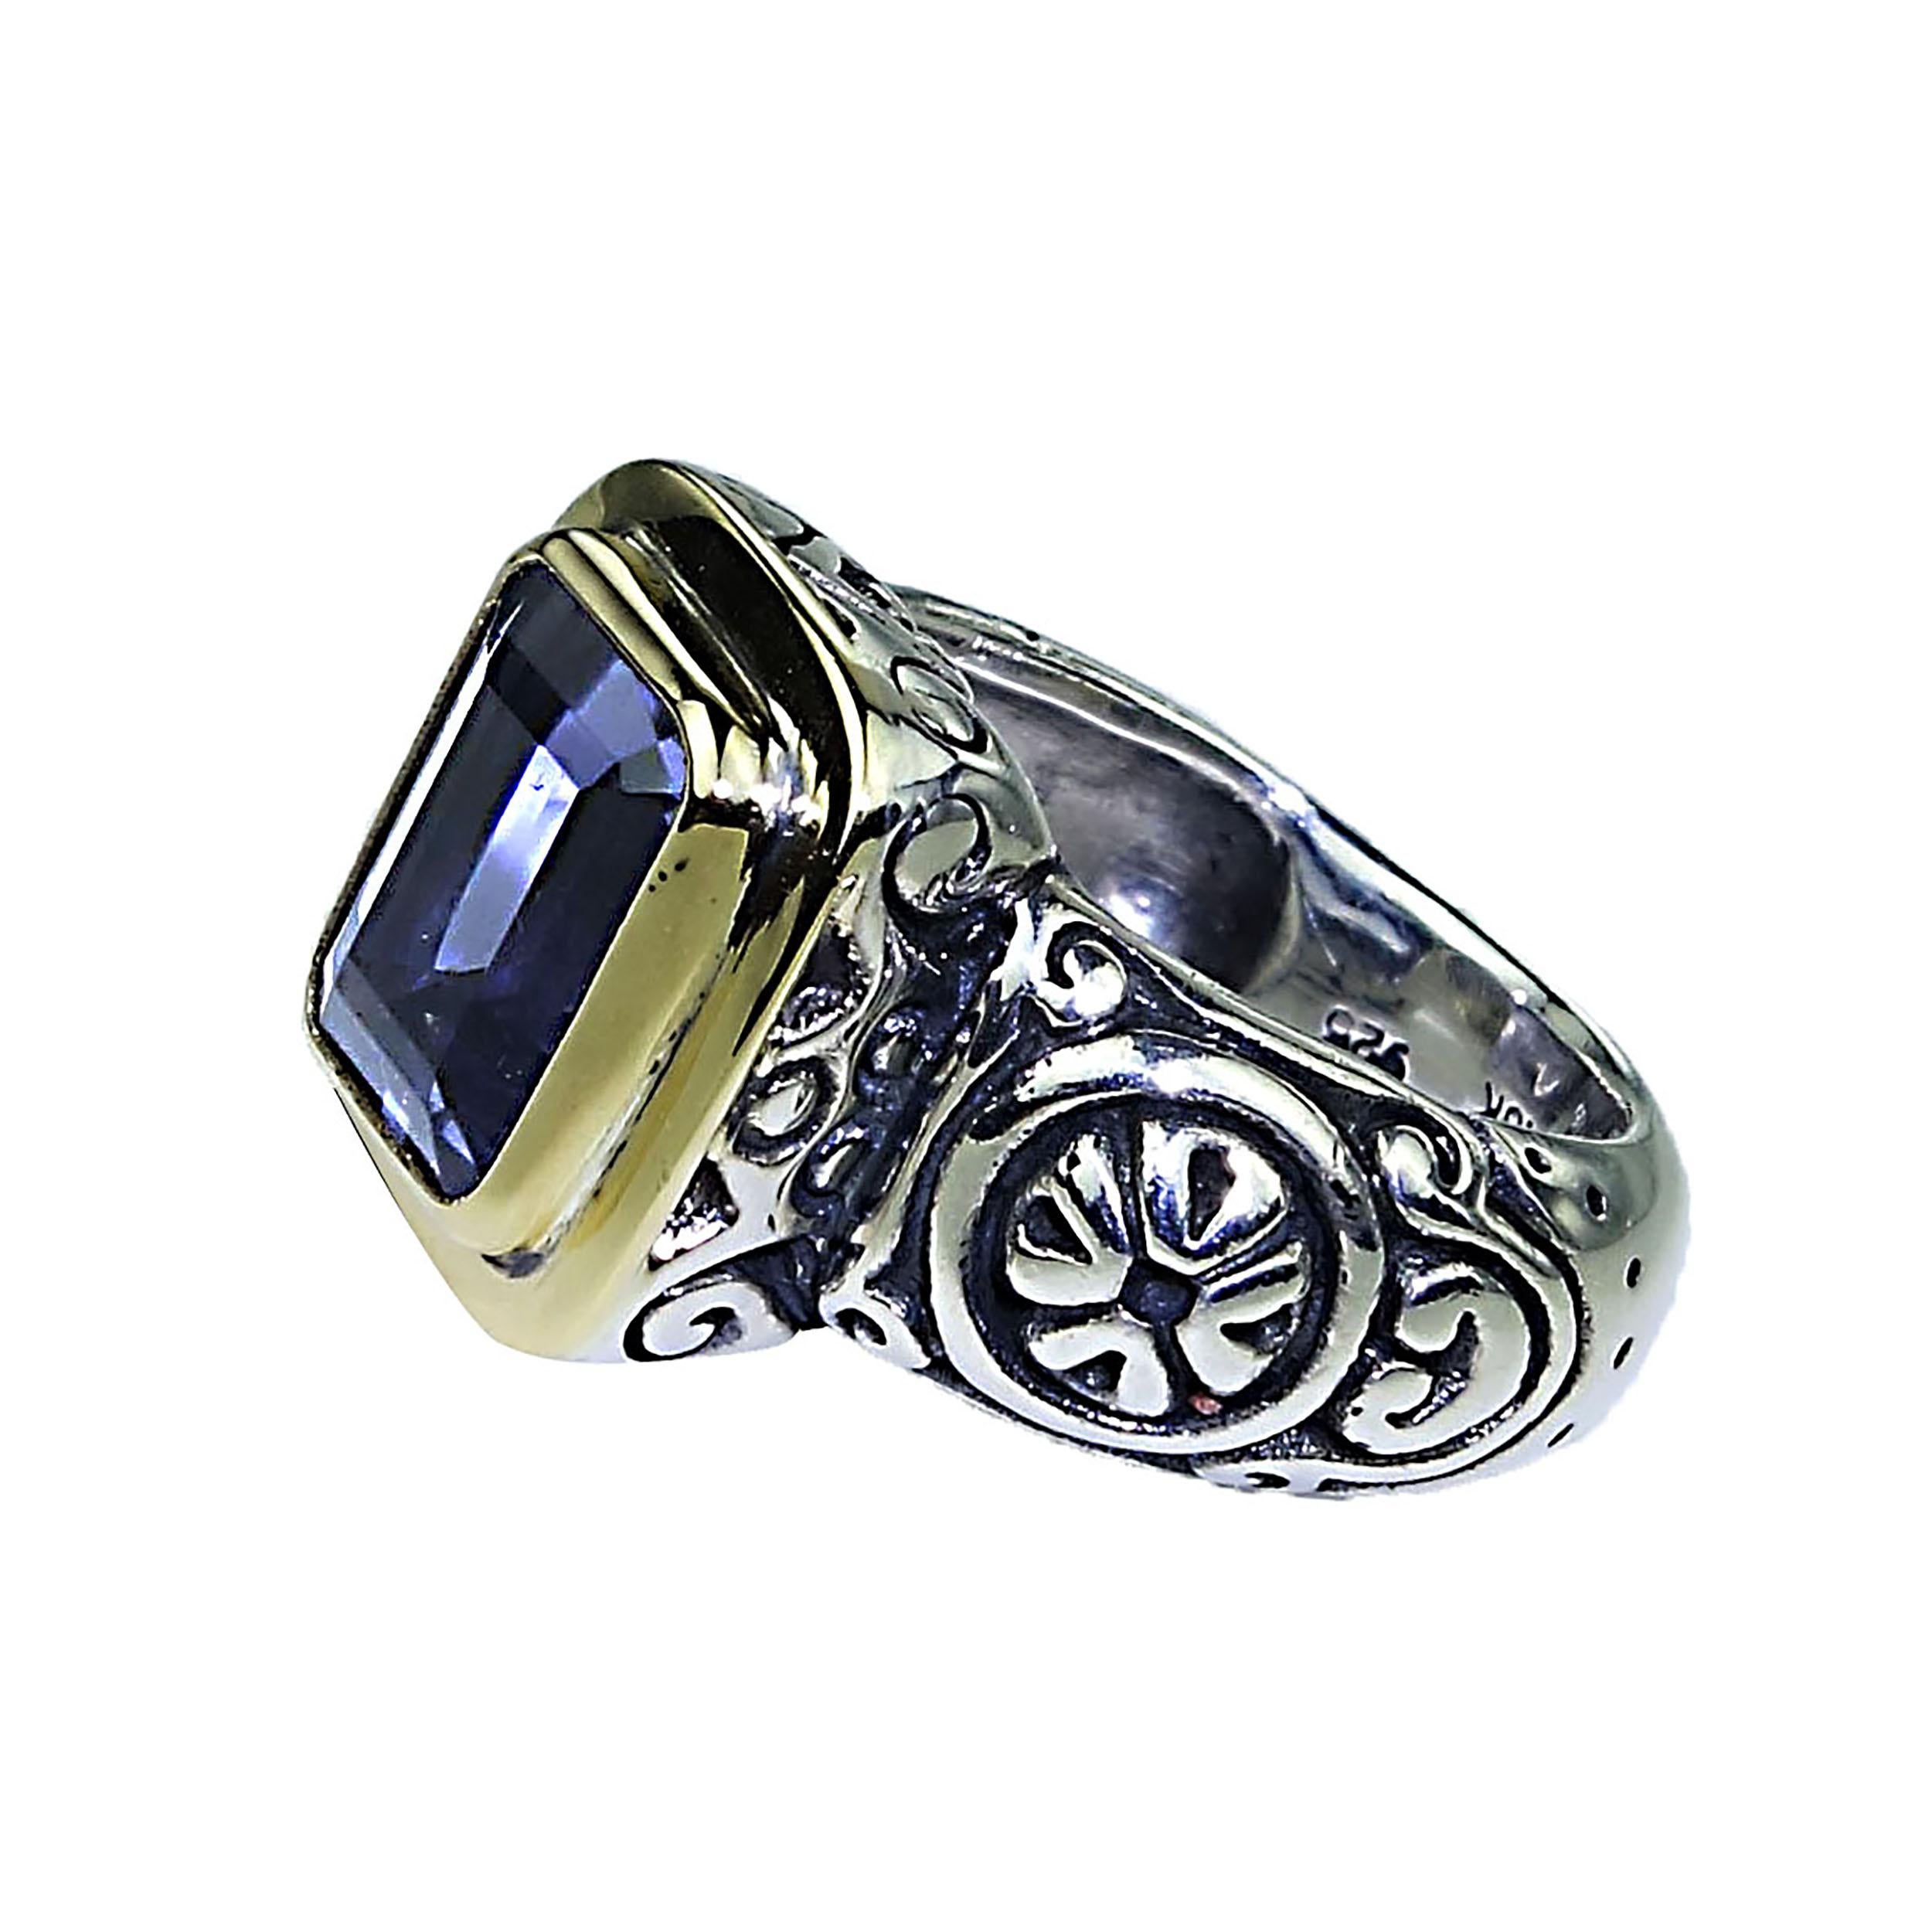 Artist AJD  Sparkling Blue Iolite in Sterling Silver Ring with 18 Karat Gold 